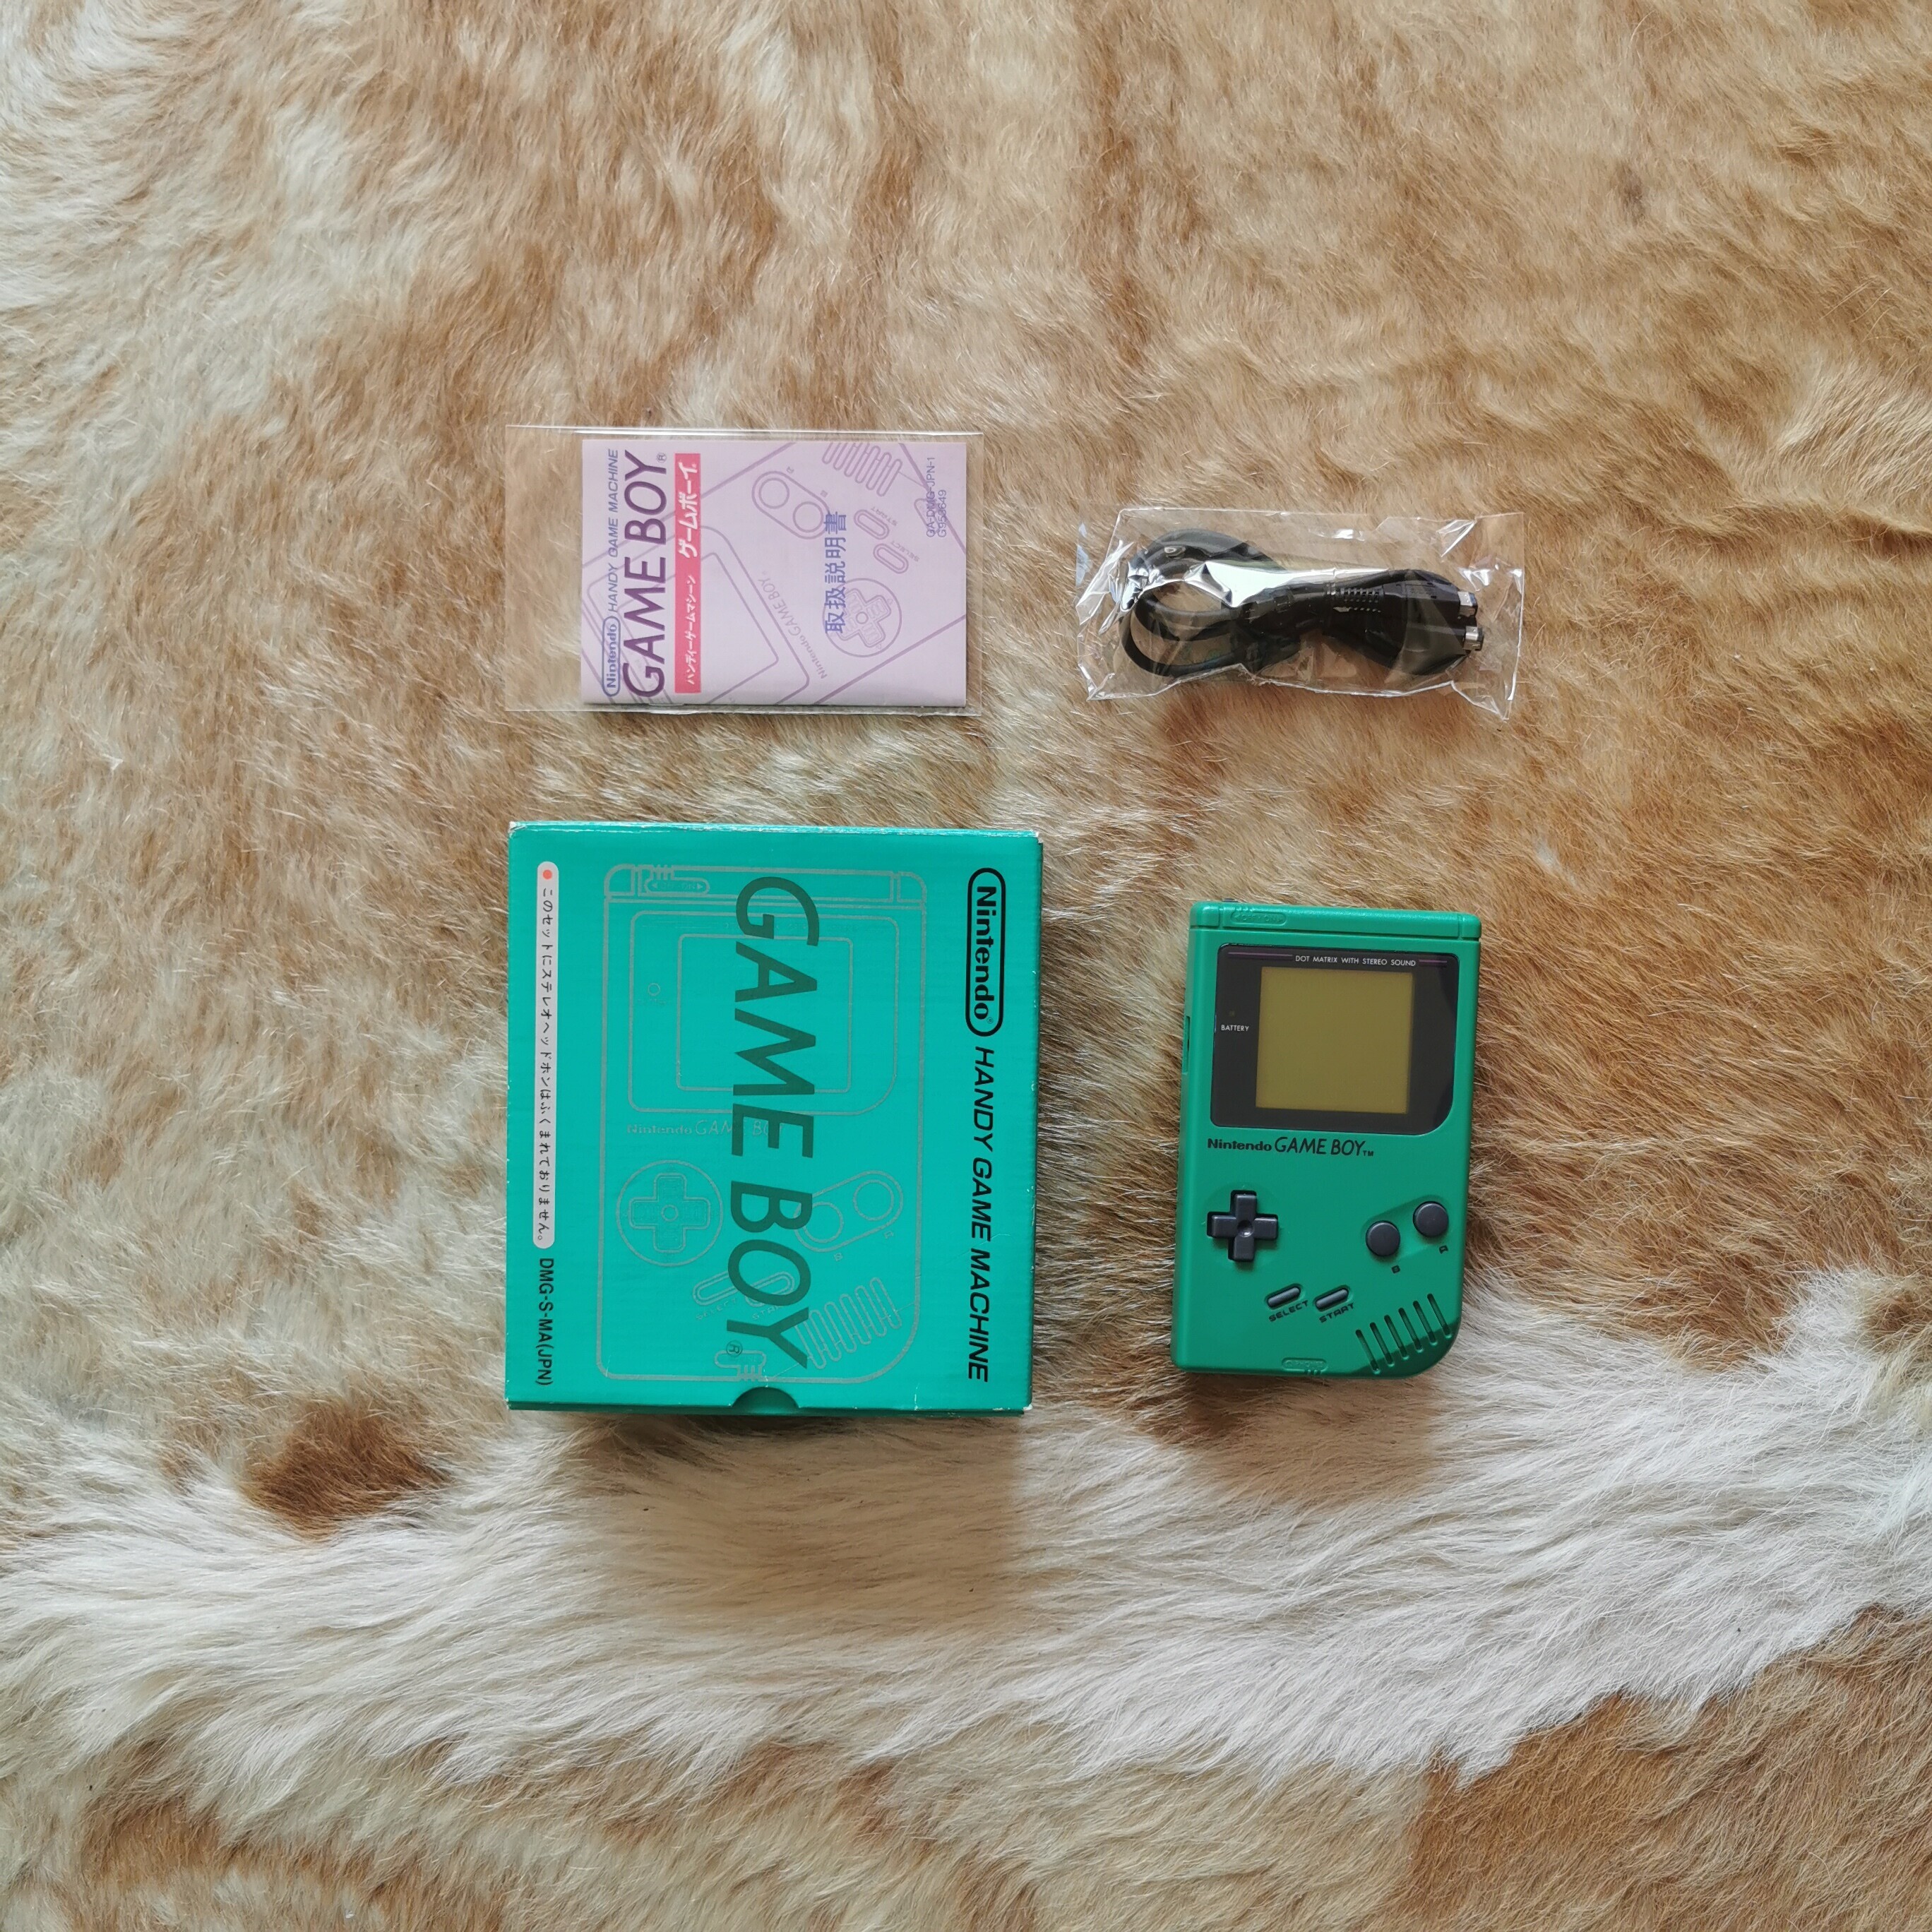  Nintendo Game Boy Doc Frog (Green) Console [JP]